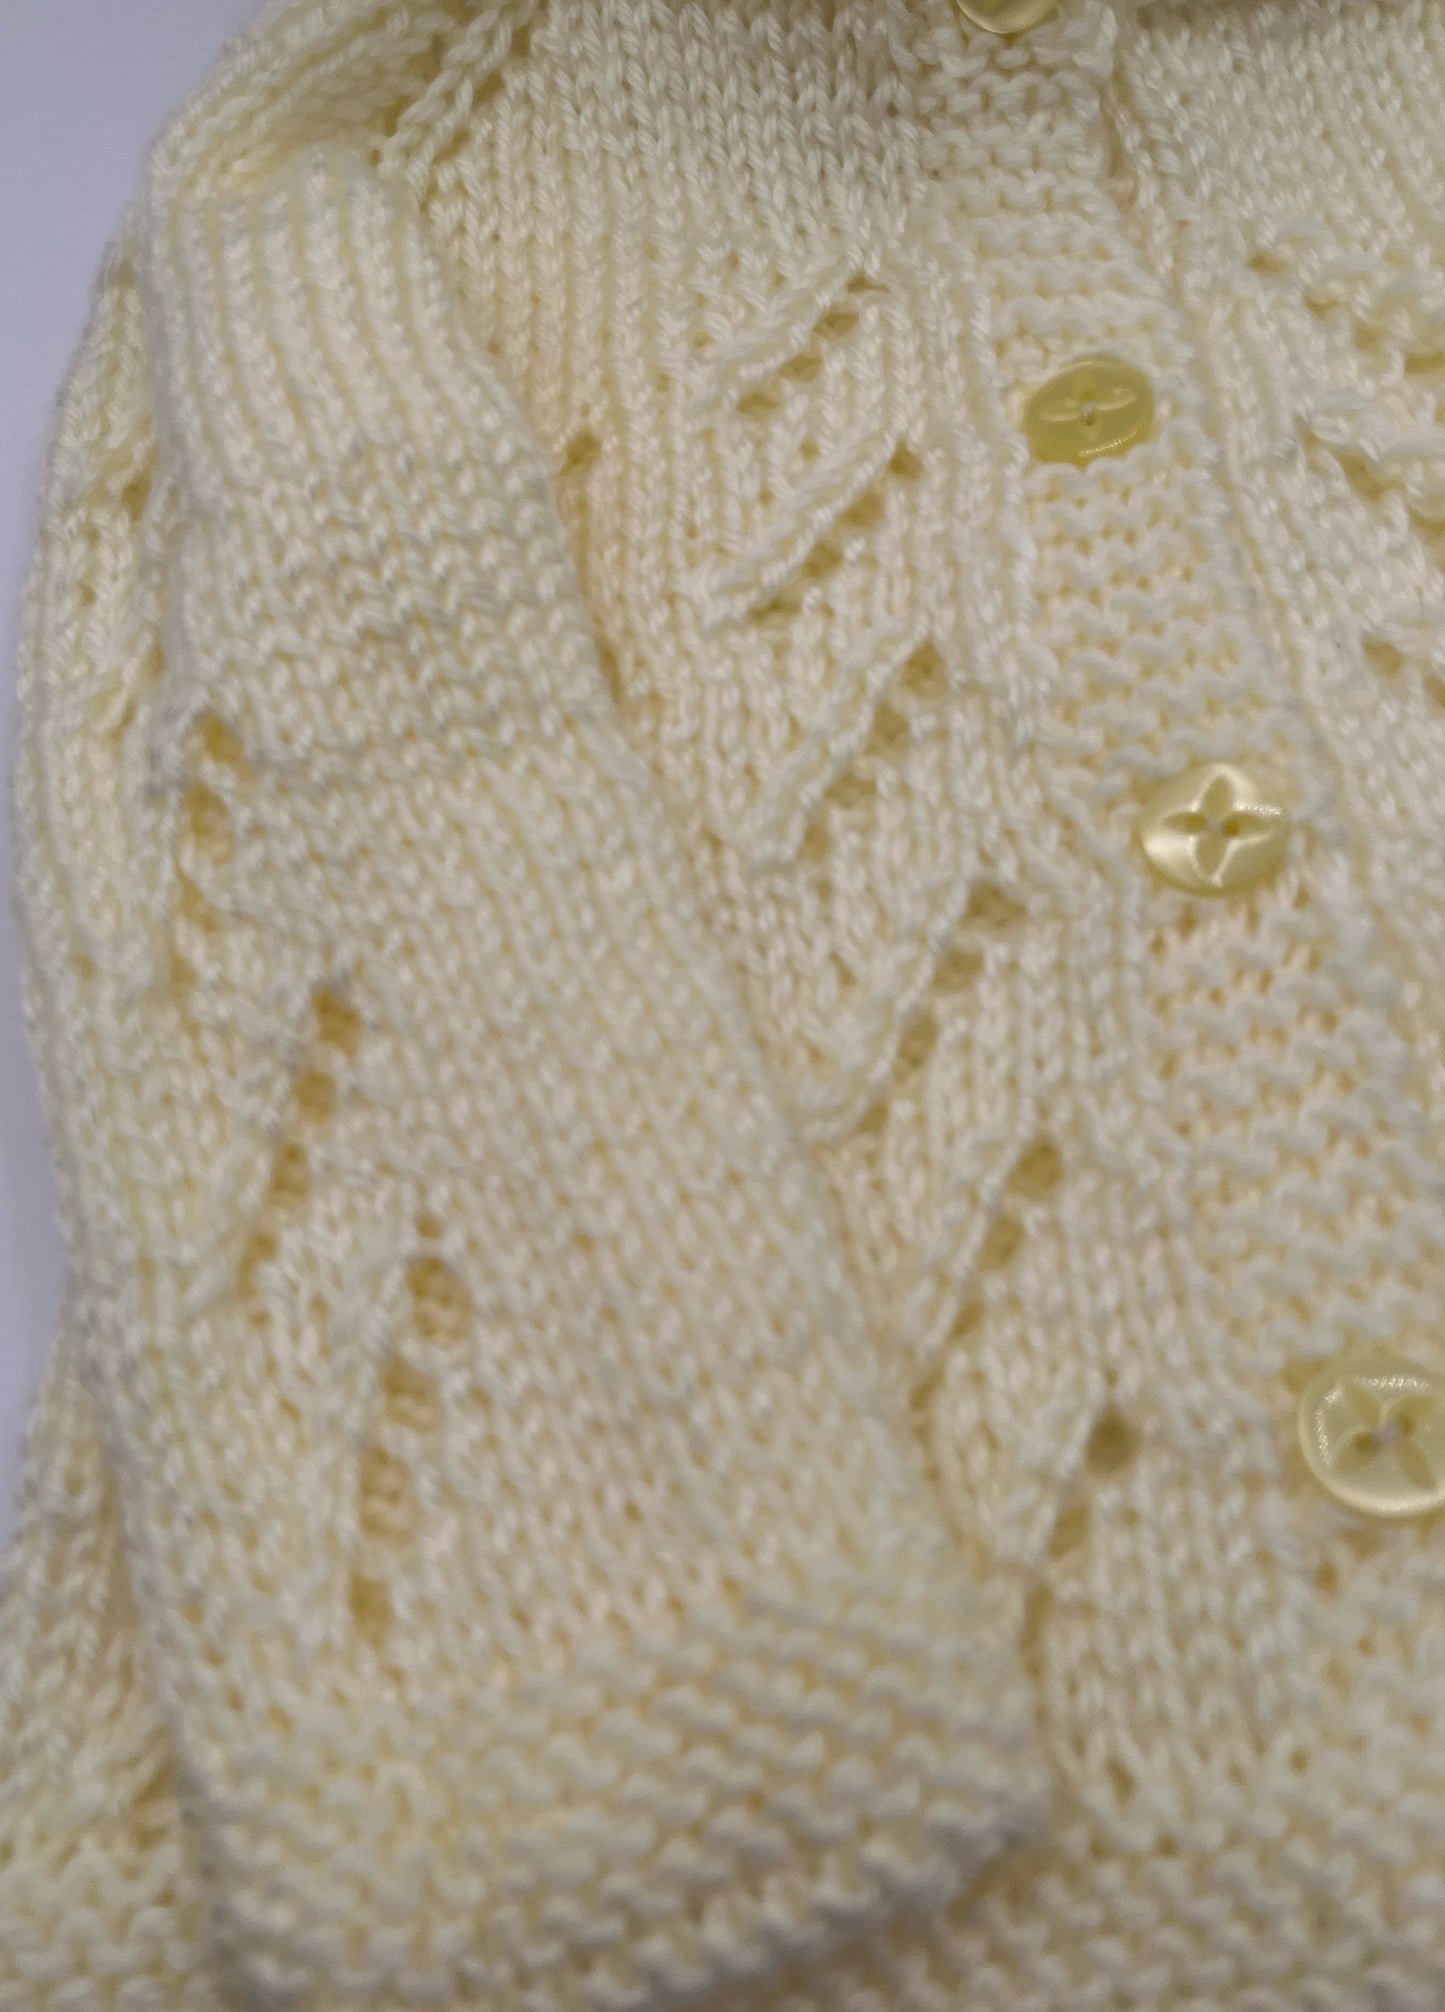 12-18M Lemon Yellow Lacework Acrylic Knit Cardigan and Hat